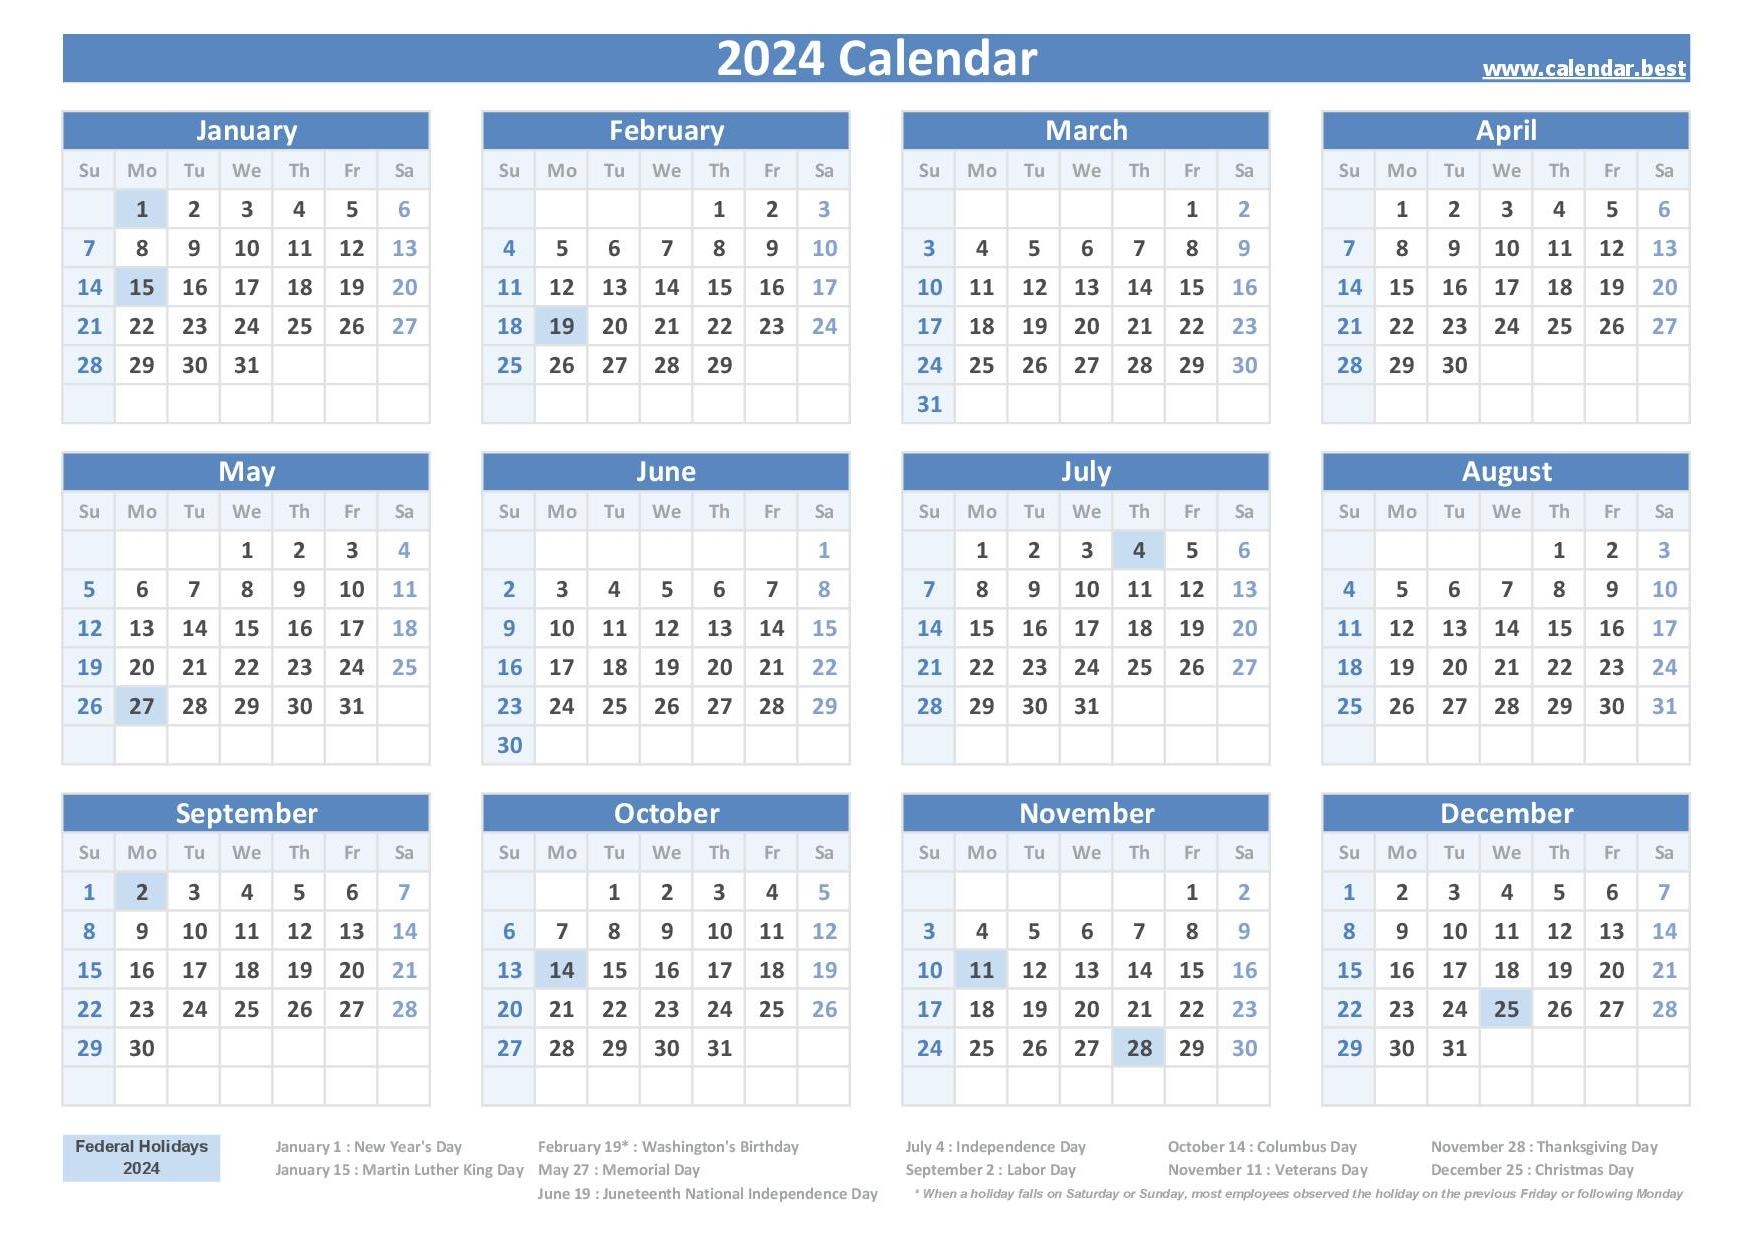 2024 Us Federal Holiday Calendar Printable Bill Marjie - Free Printable 2024 Calendar With Holidays November